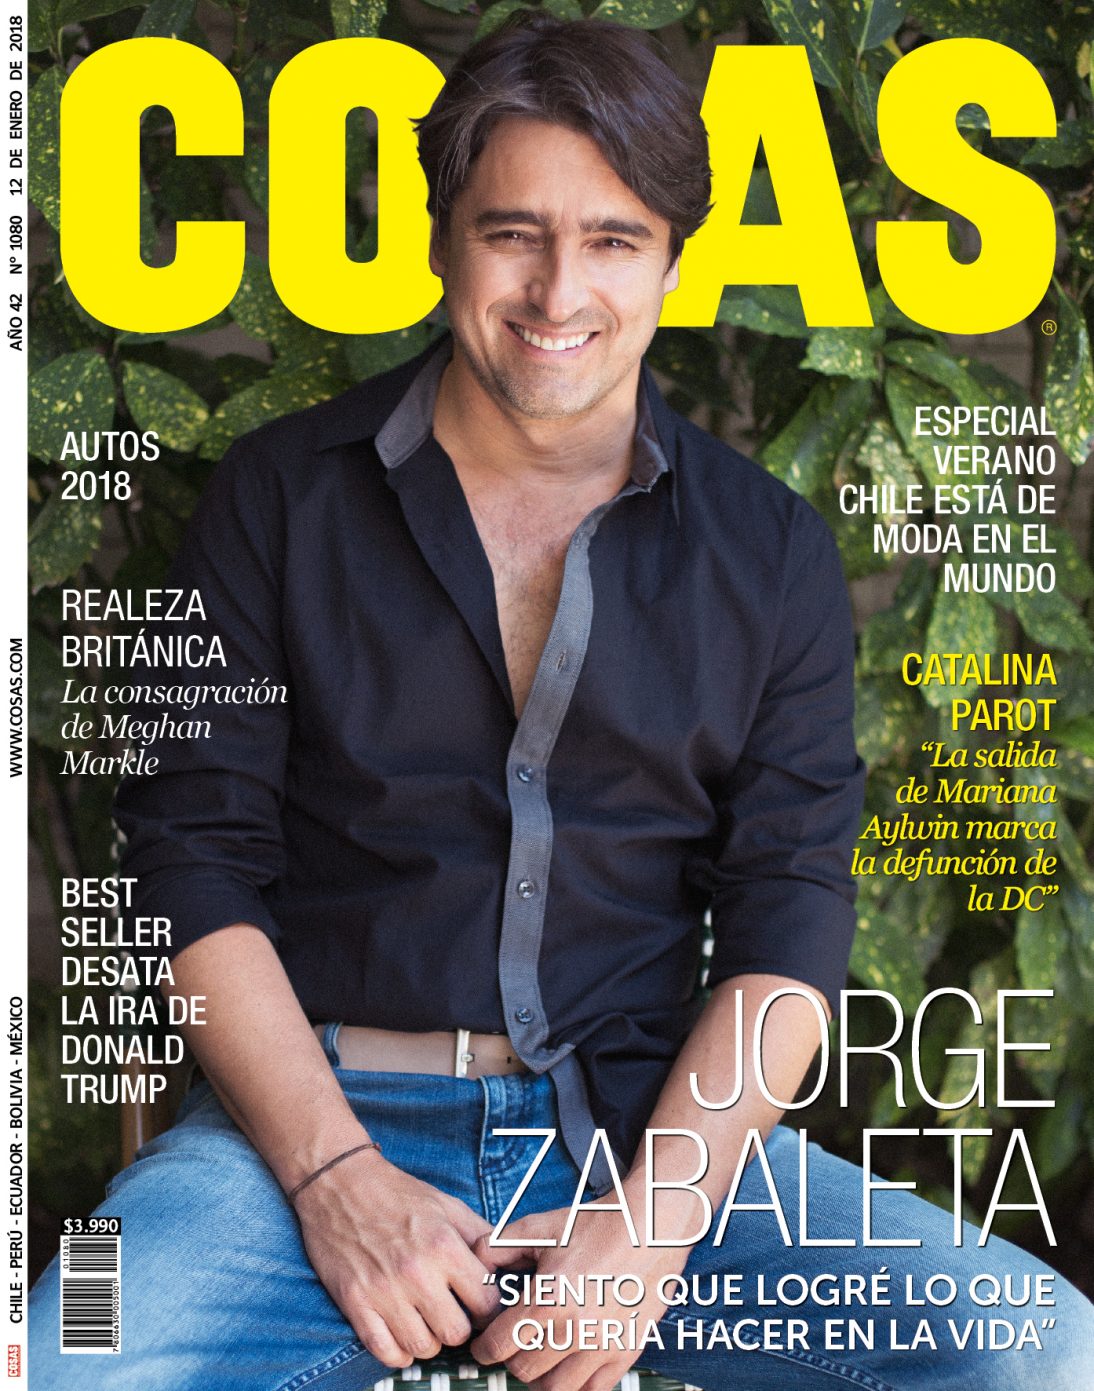 Jorge Zabaleta revista Cosas